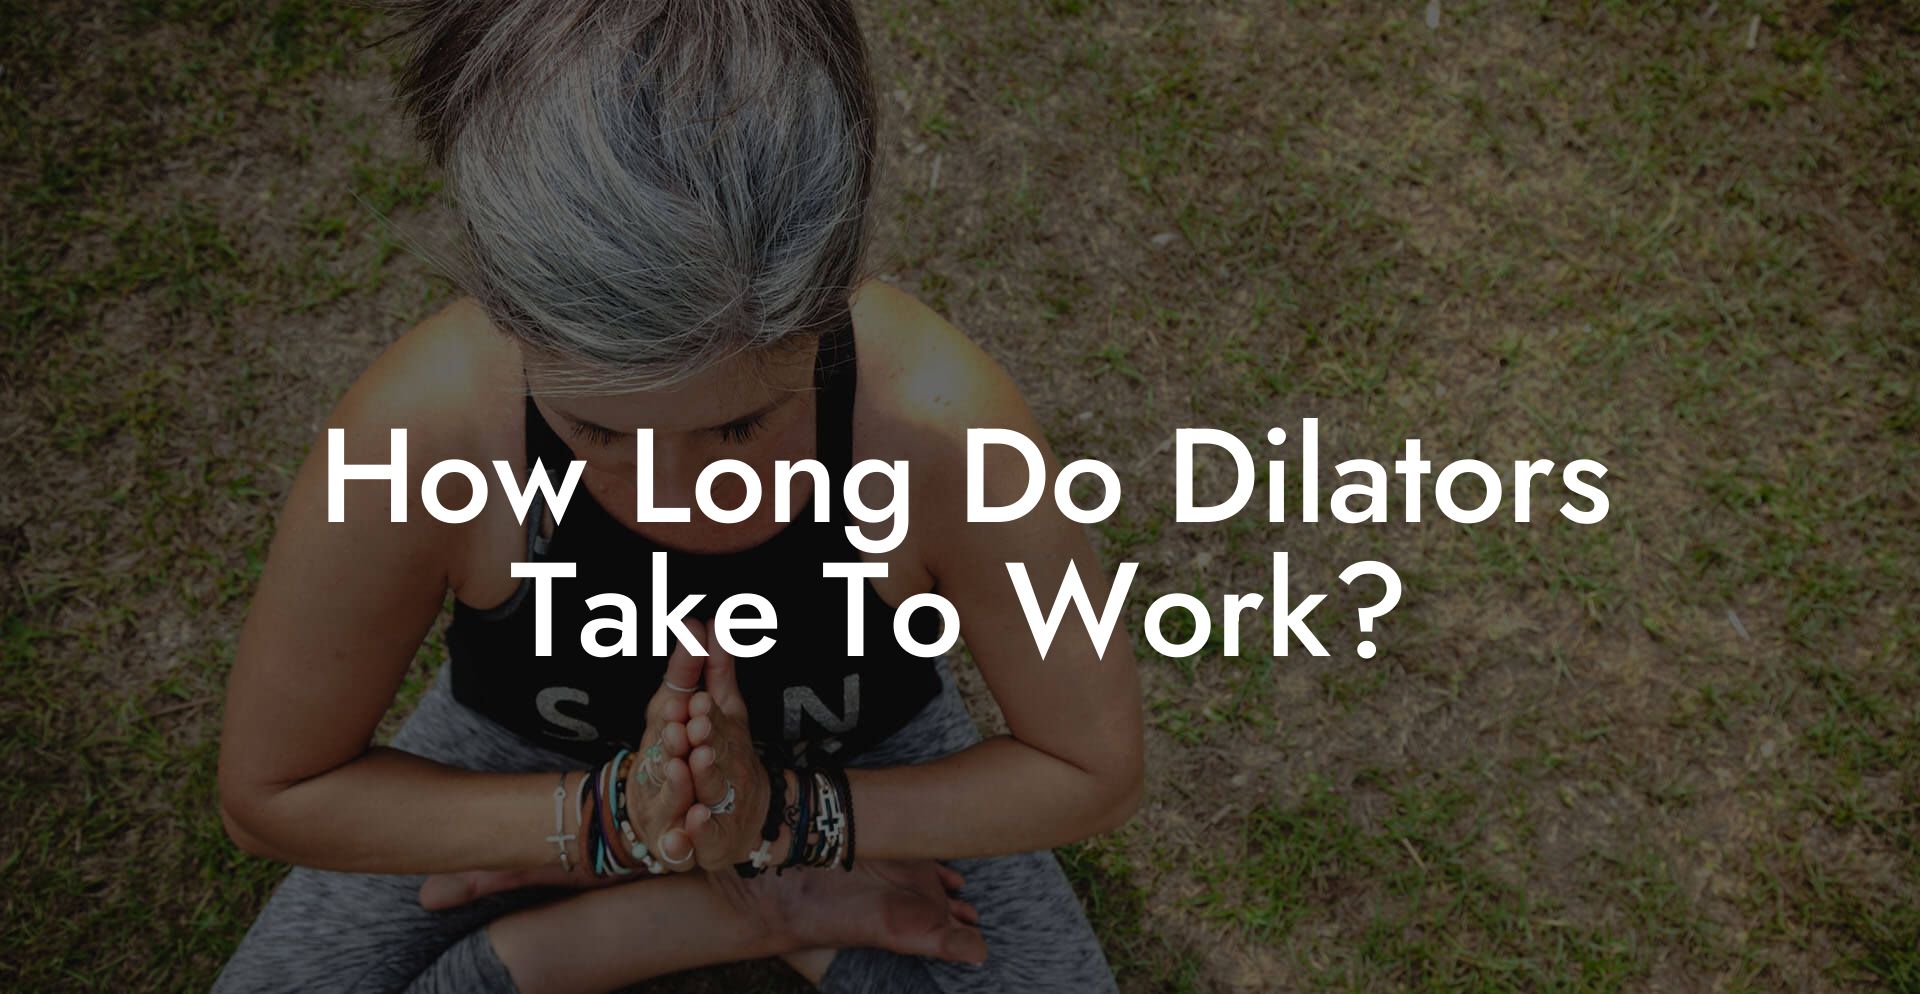 How Long Do Dilators Take To Work?